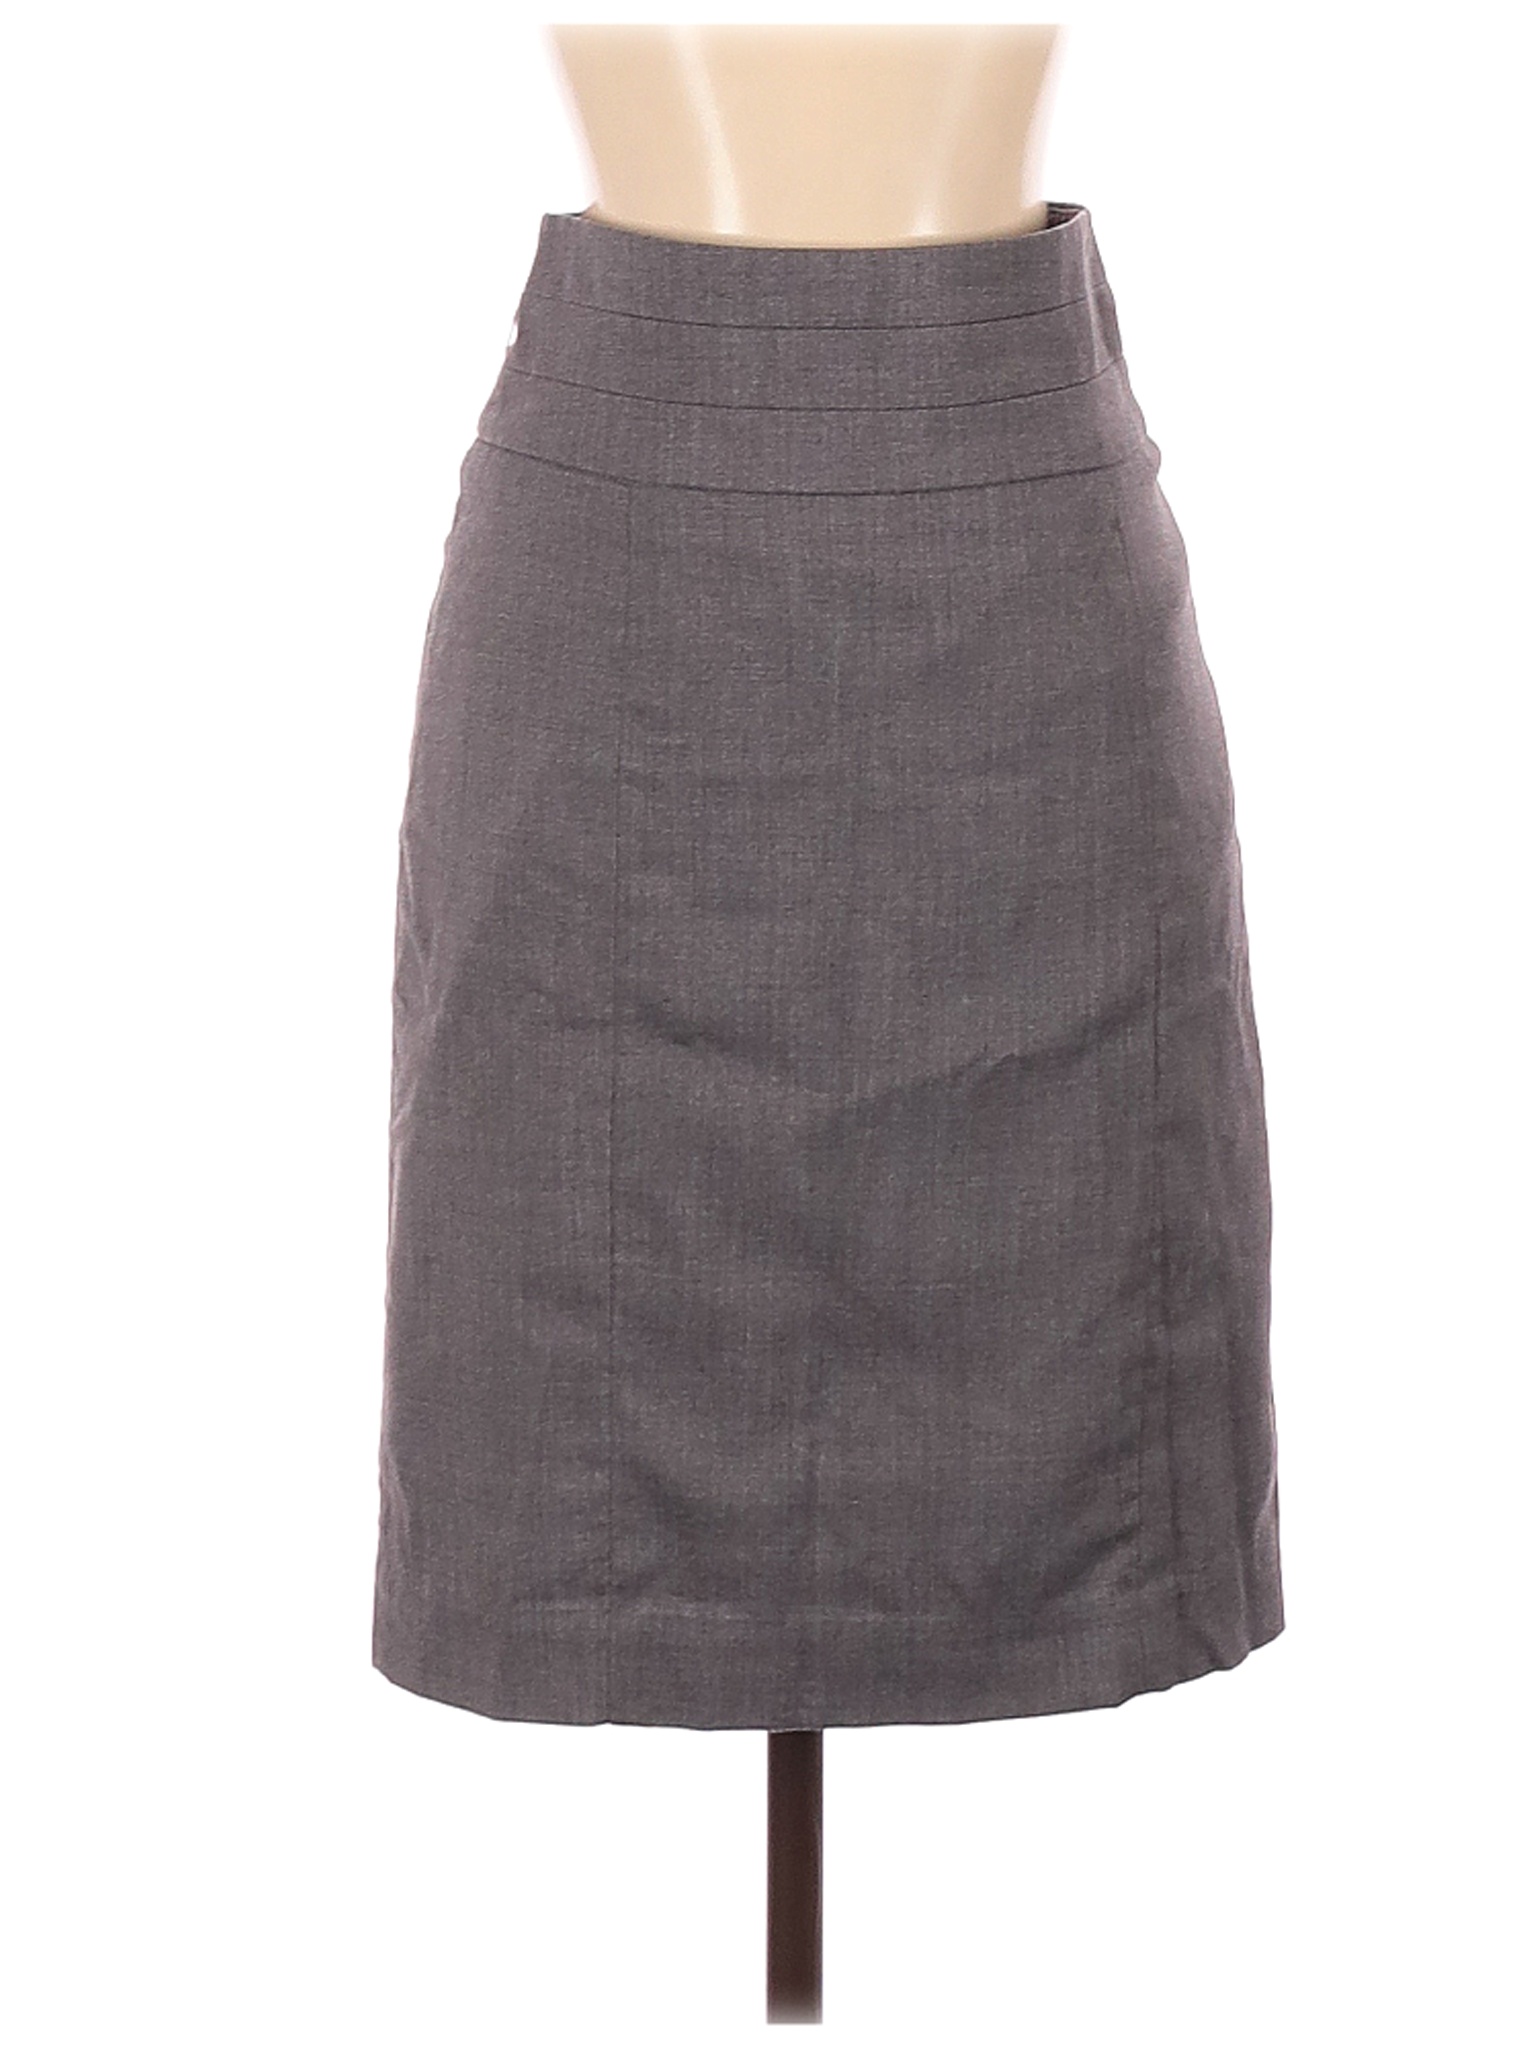 H&M Women Gray Casual Skirt 4 | eBay